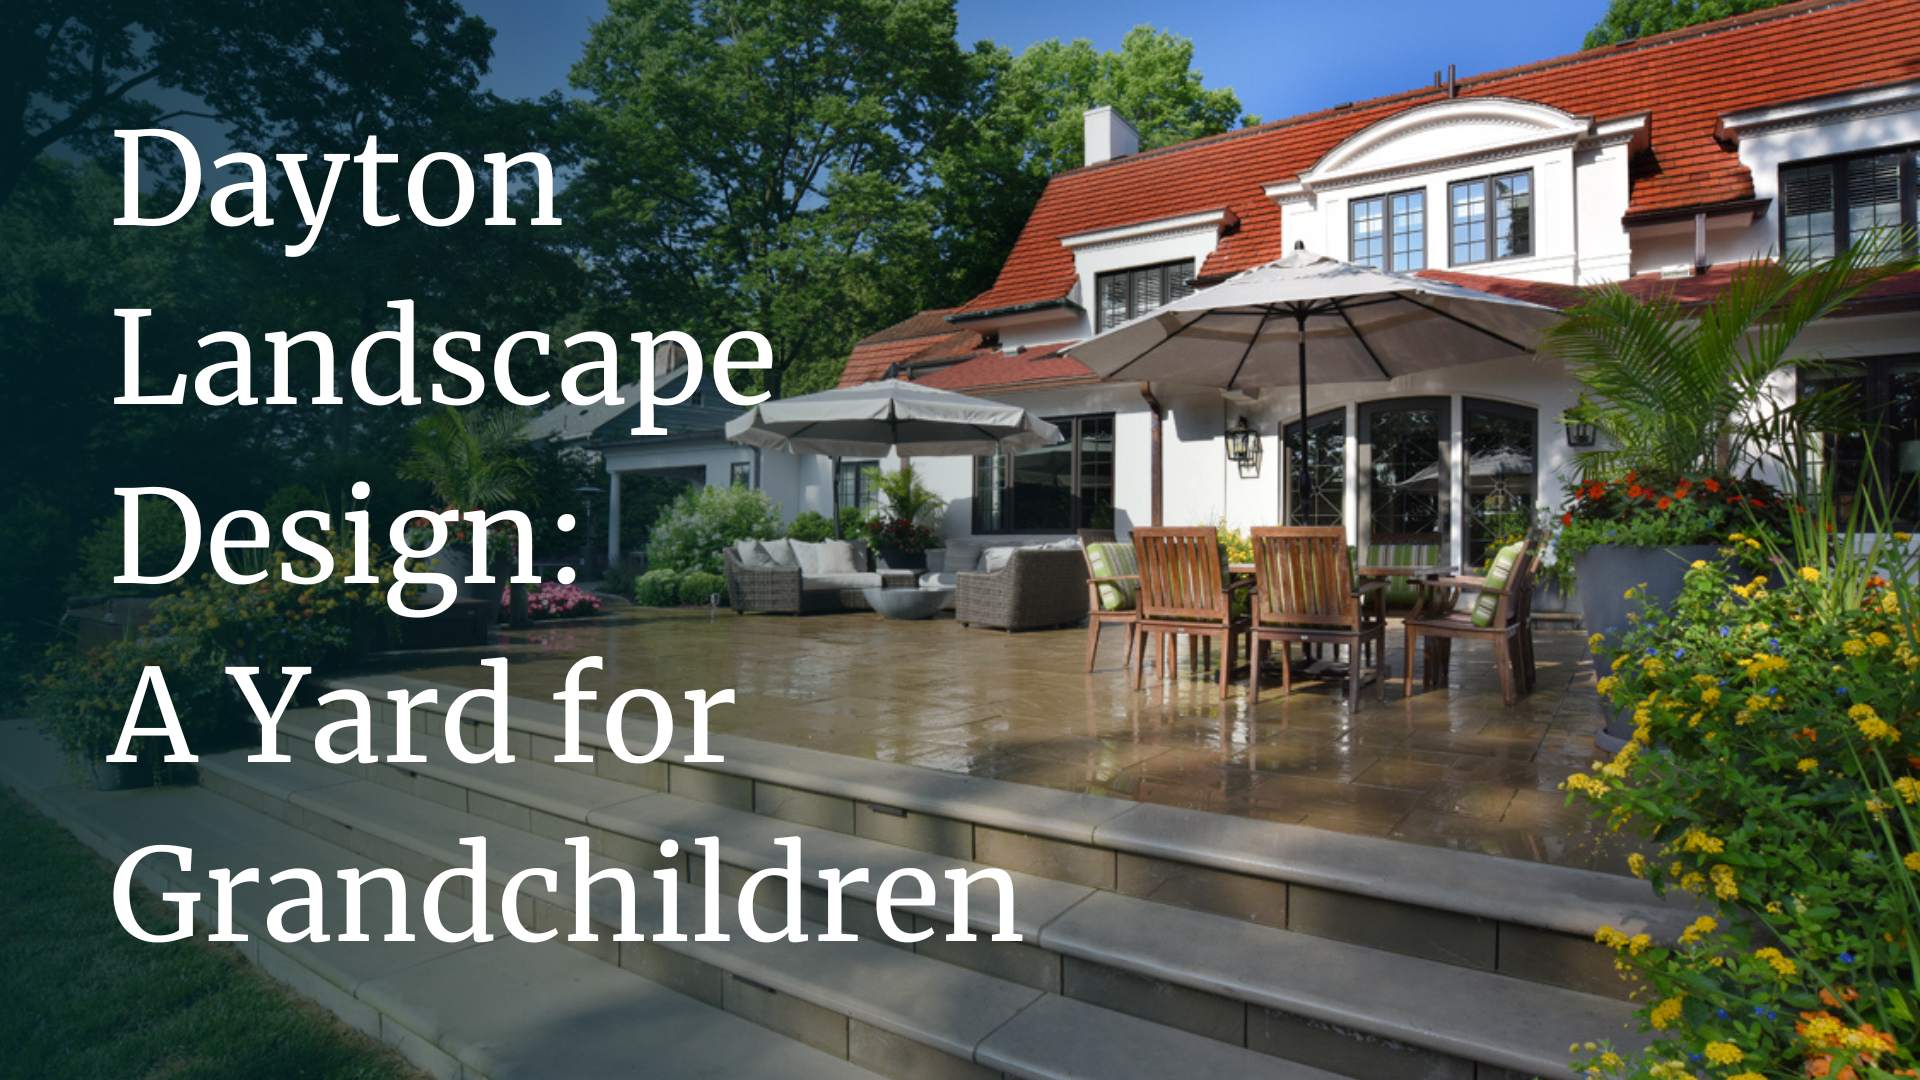 Develop Garden Featured Projects Landscape Architecture Design The SiteGroup